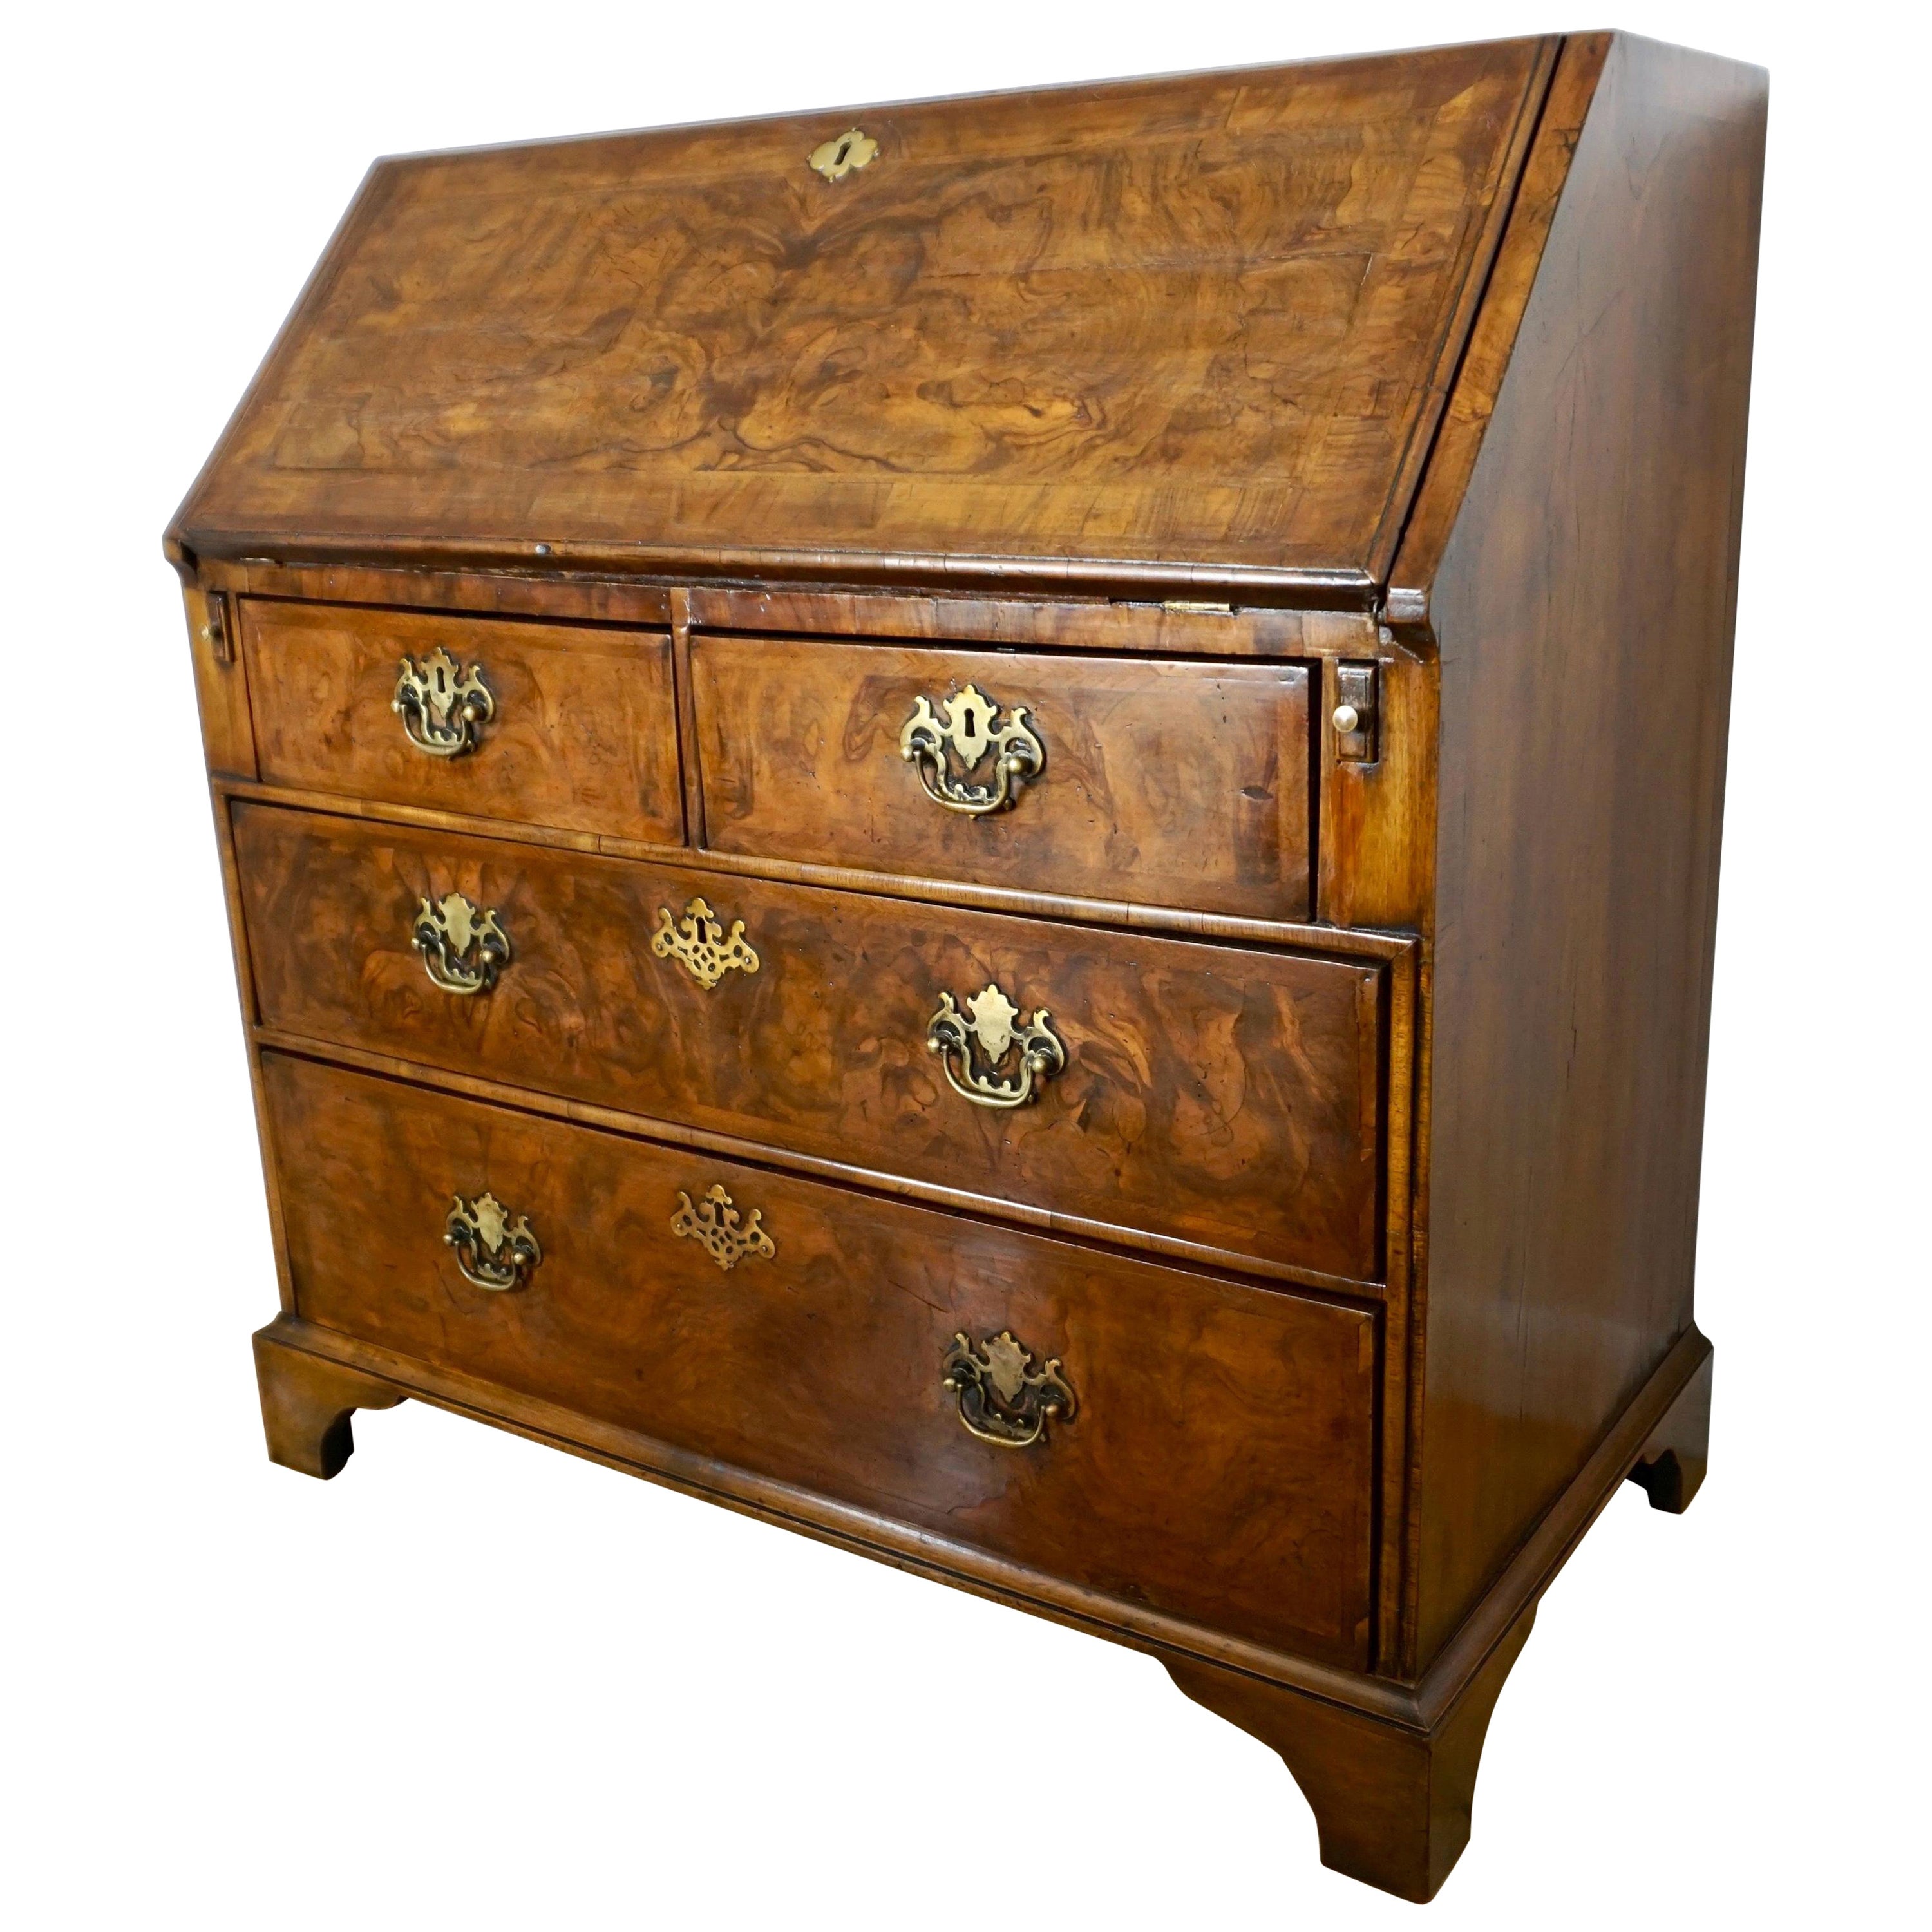 Early 18th Century English Walnut Veneered Stepped Interior Georgian Bureau Desk For Sale